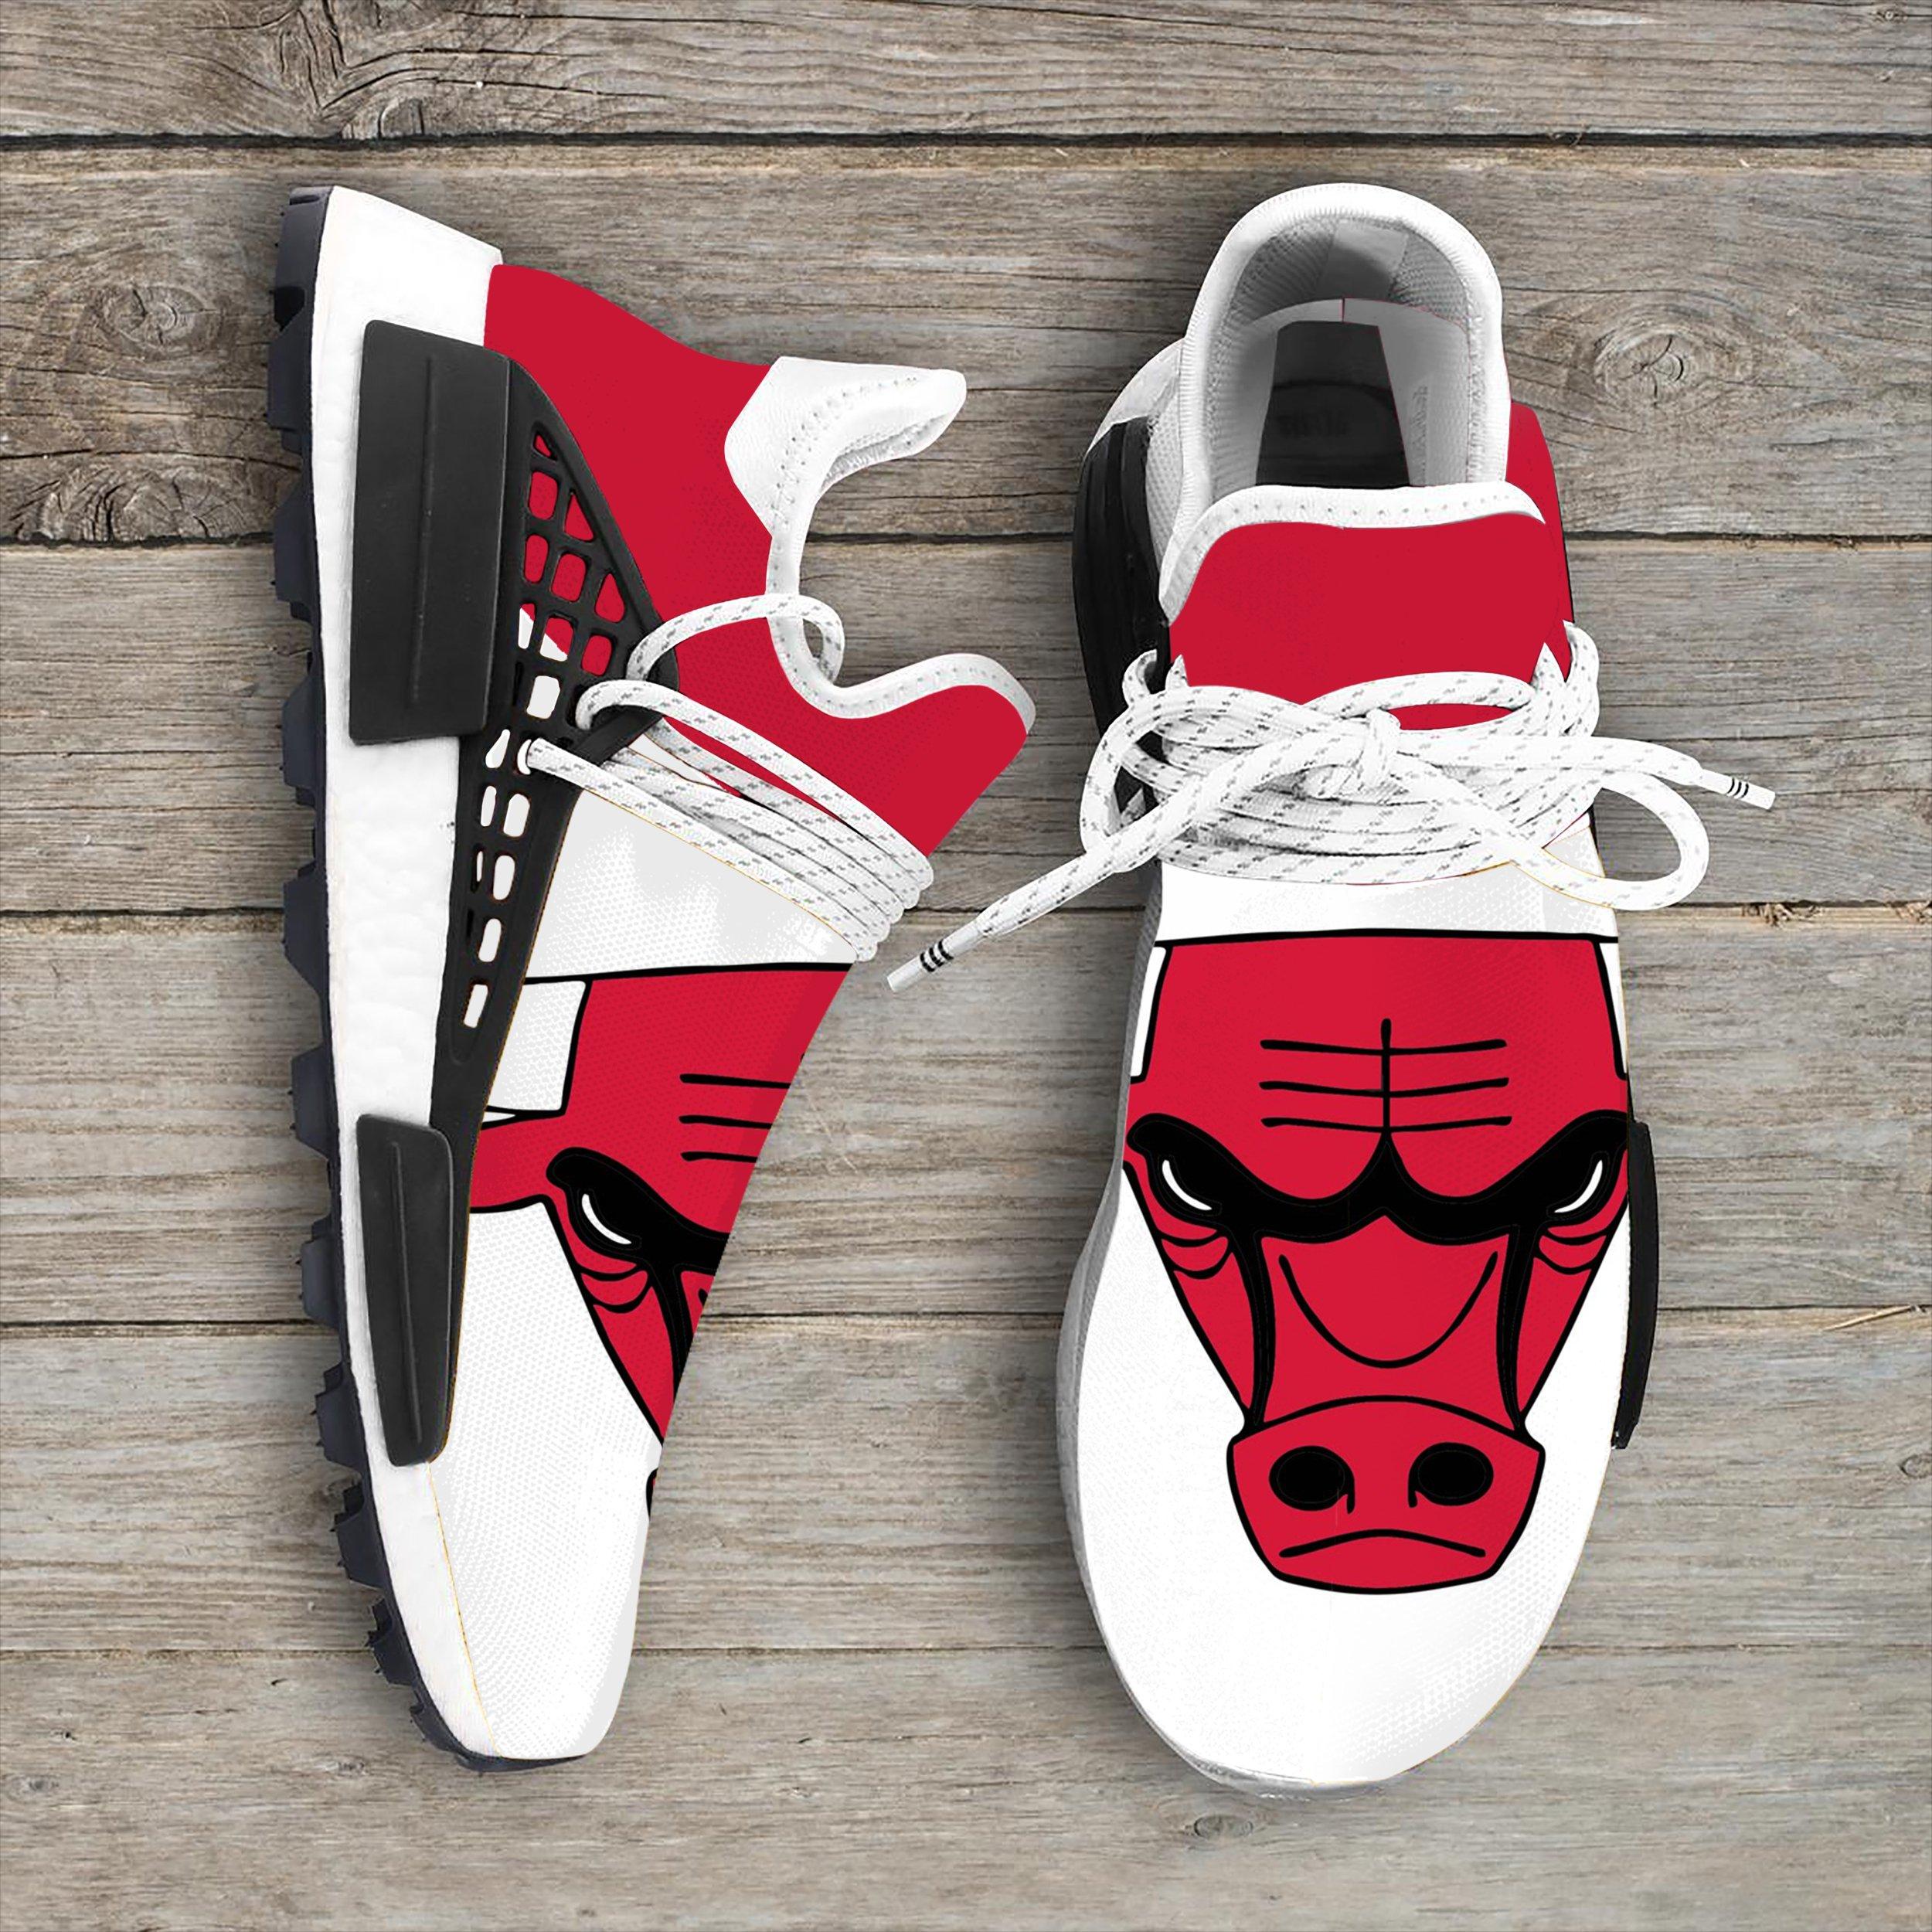 Chicago Bulls NBA NMD Human Race Shoes 